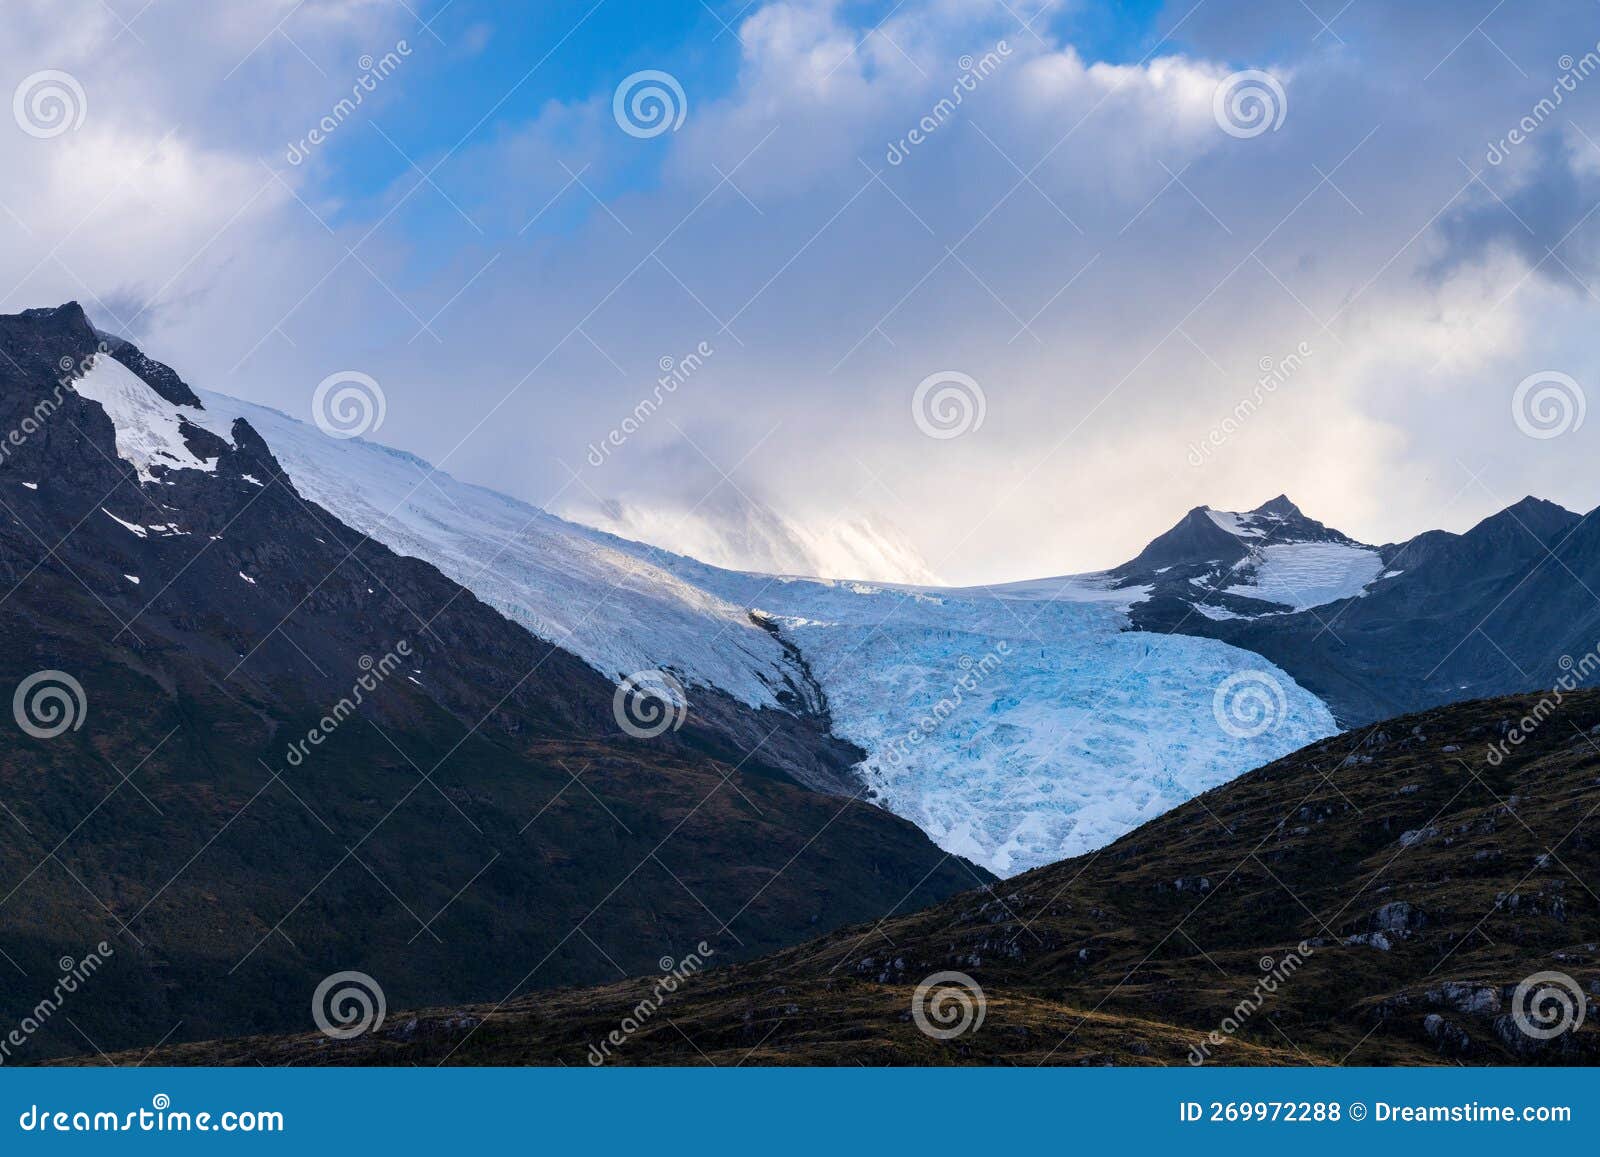 holanda or dutch glacier by beagle channel in chile